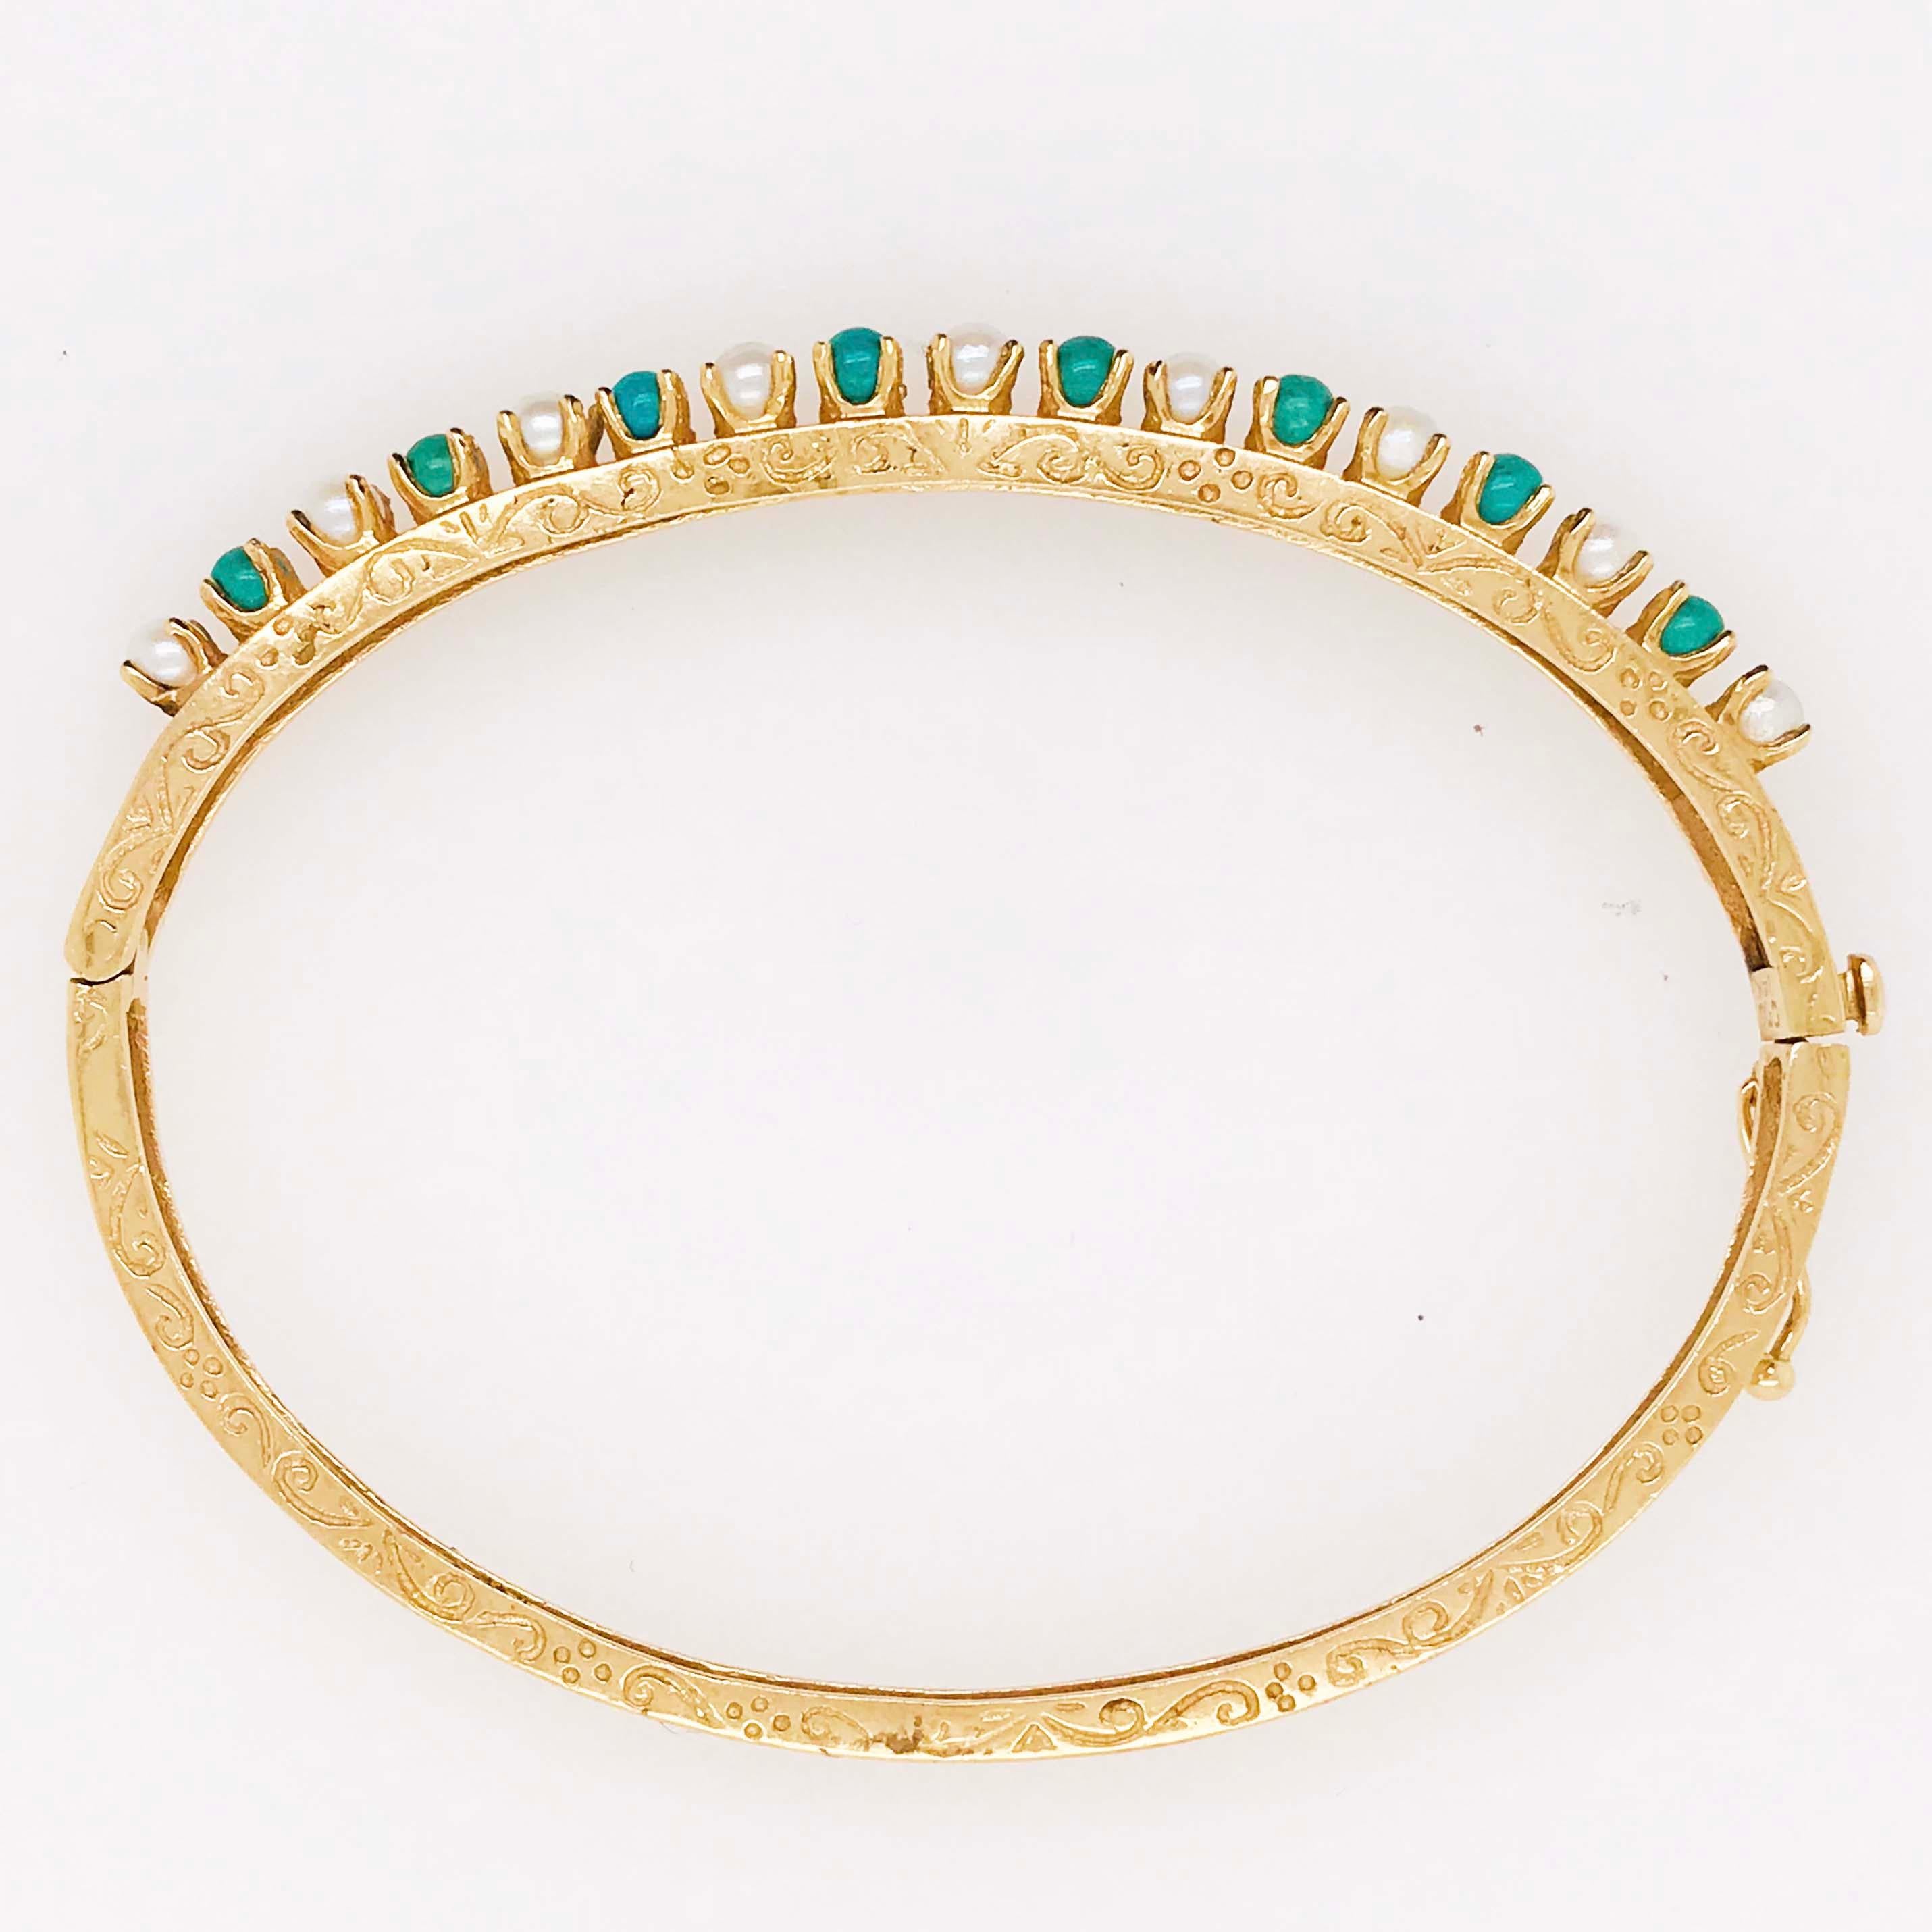 Antique and Original Pearl and Amazonite Bangle Bracelet, 14 Karat Gold Genuine 1